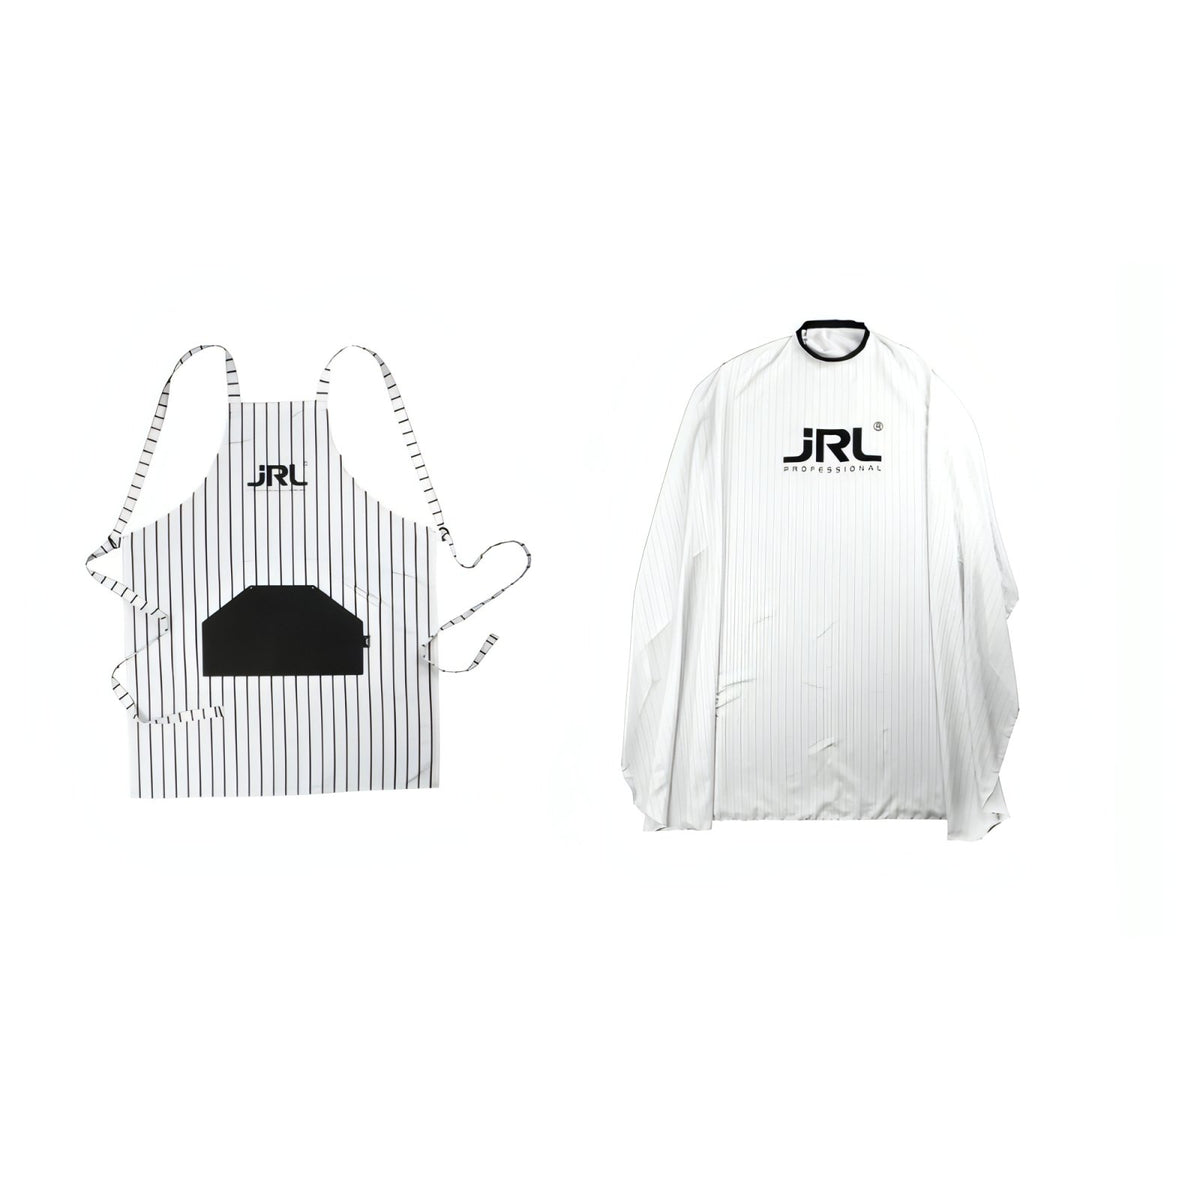 Shop — JRL Professional